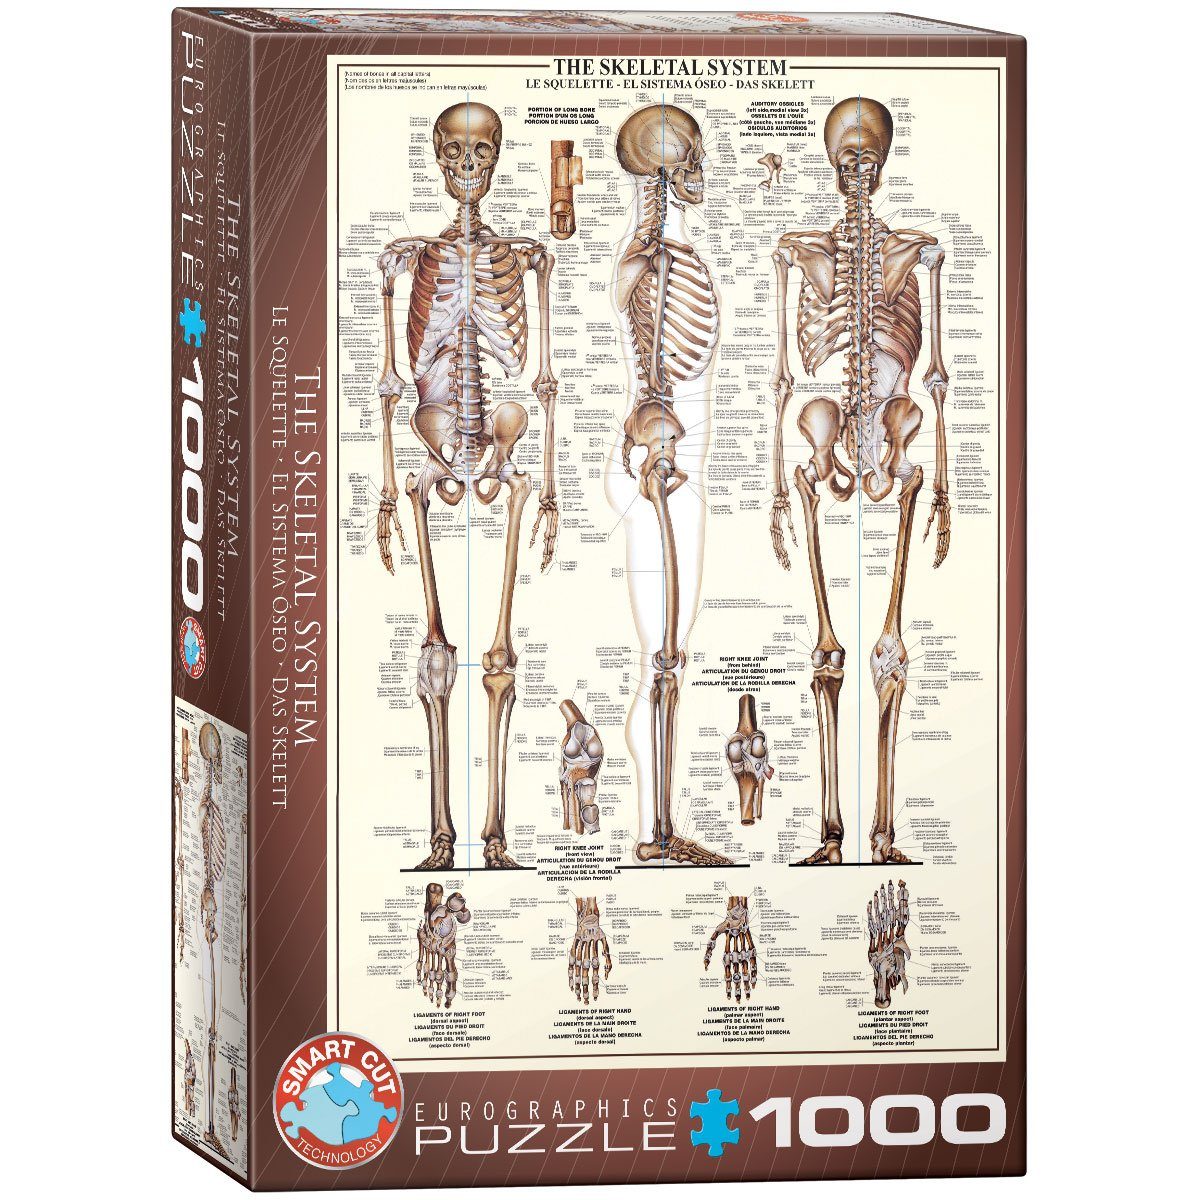 EUROGRAPHICS Puzzle Das Skelett, 1000 Puzzleteile